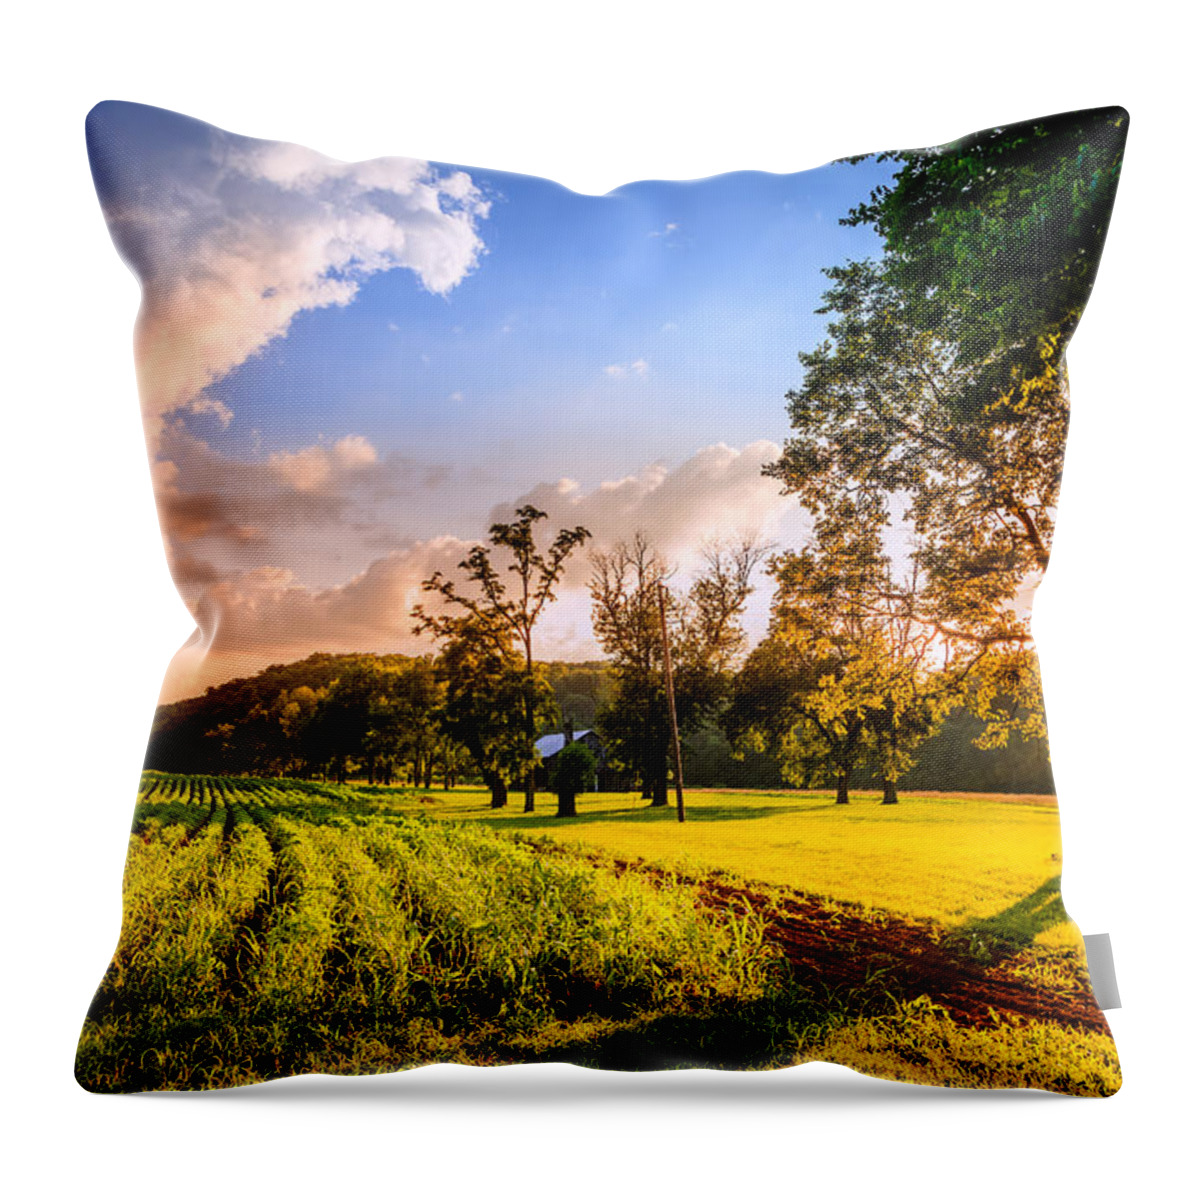 Kentucky Throw Pillow featuring the photograph Rural scene #1 by Alexey Stiop